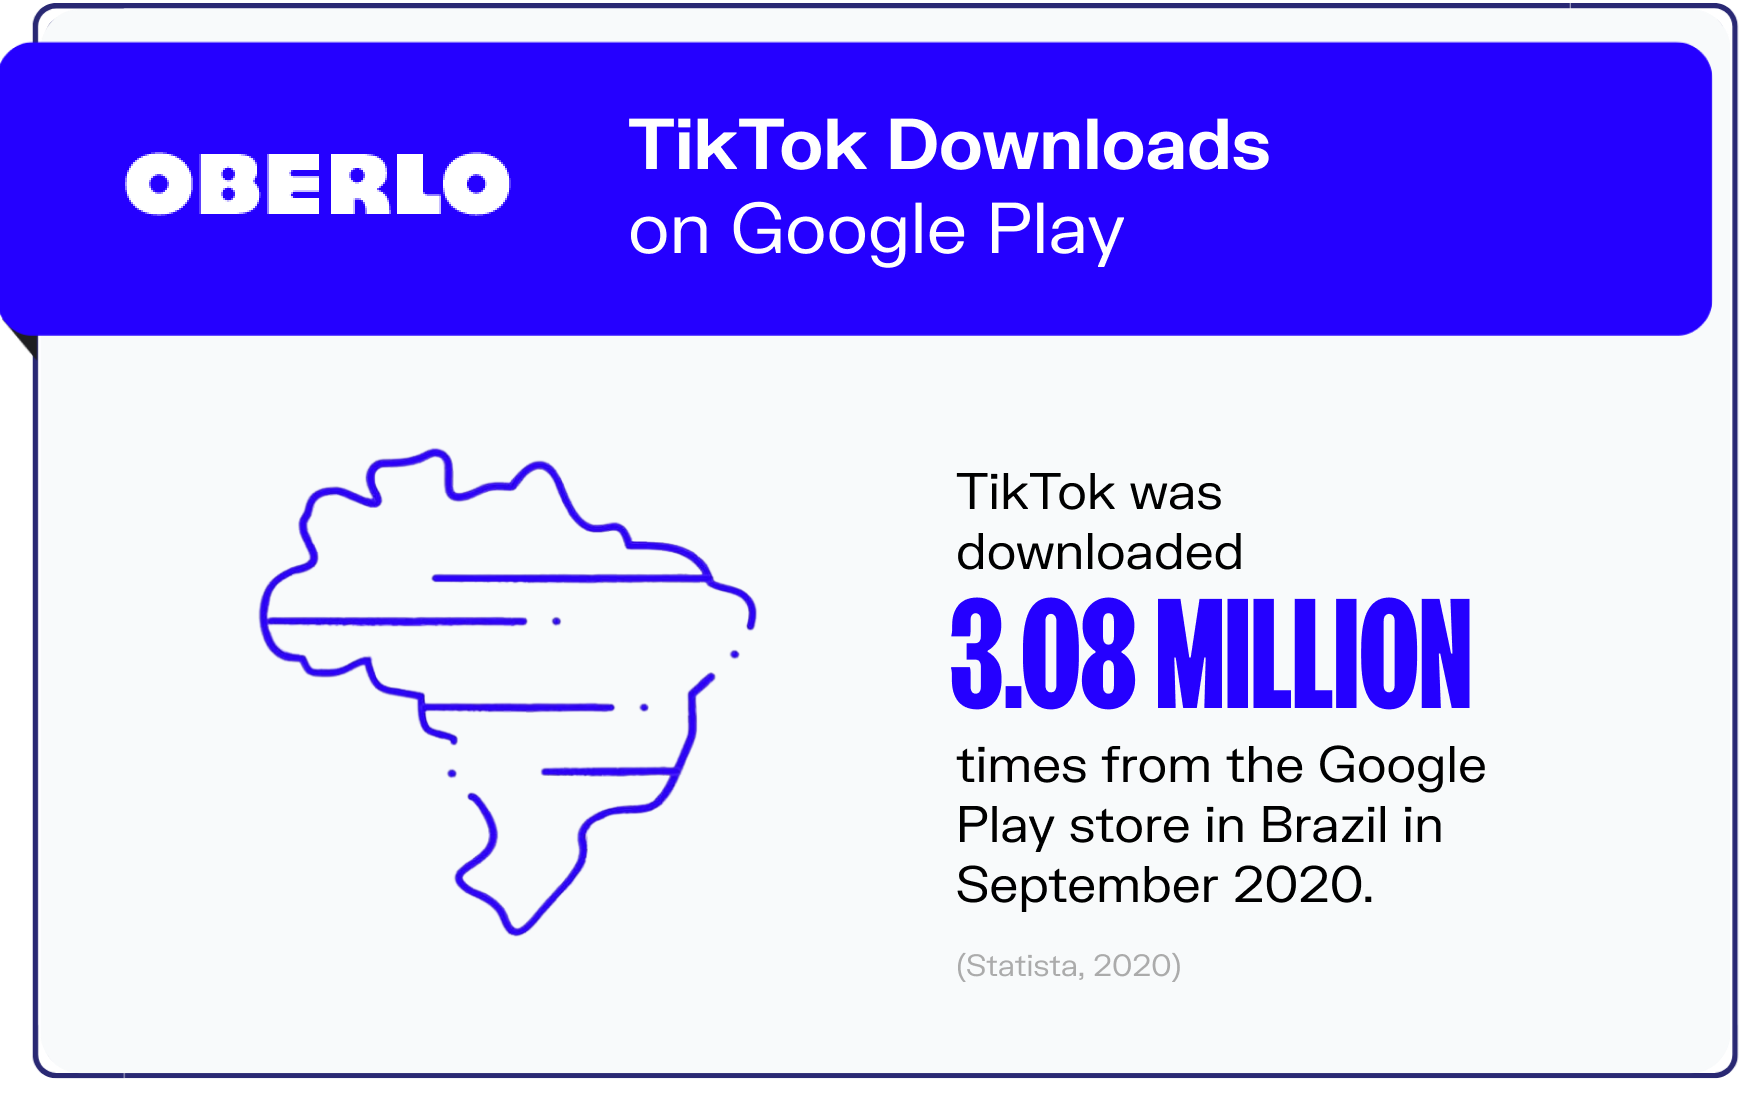 Tiktok Statistics Graphic5